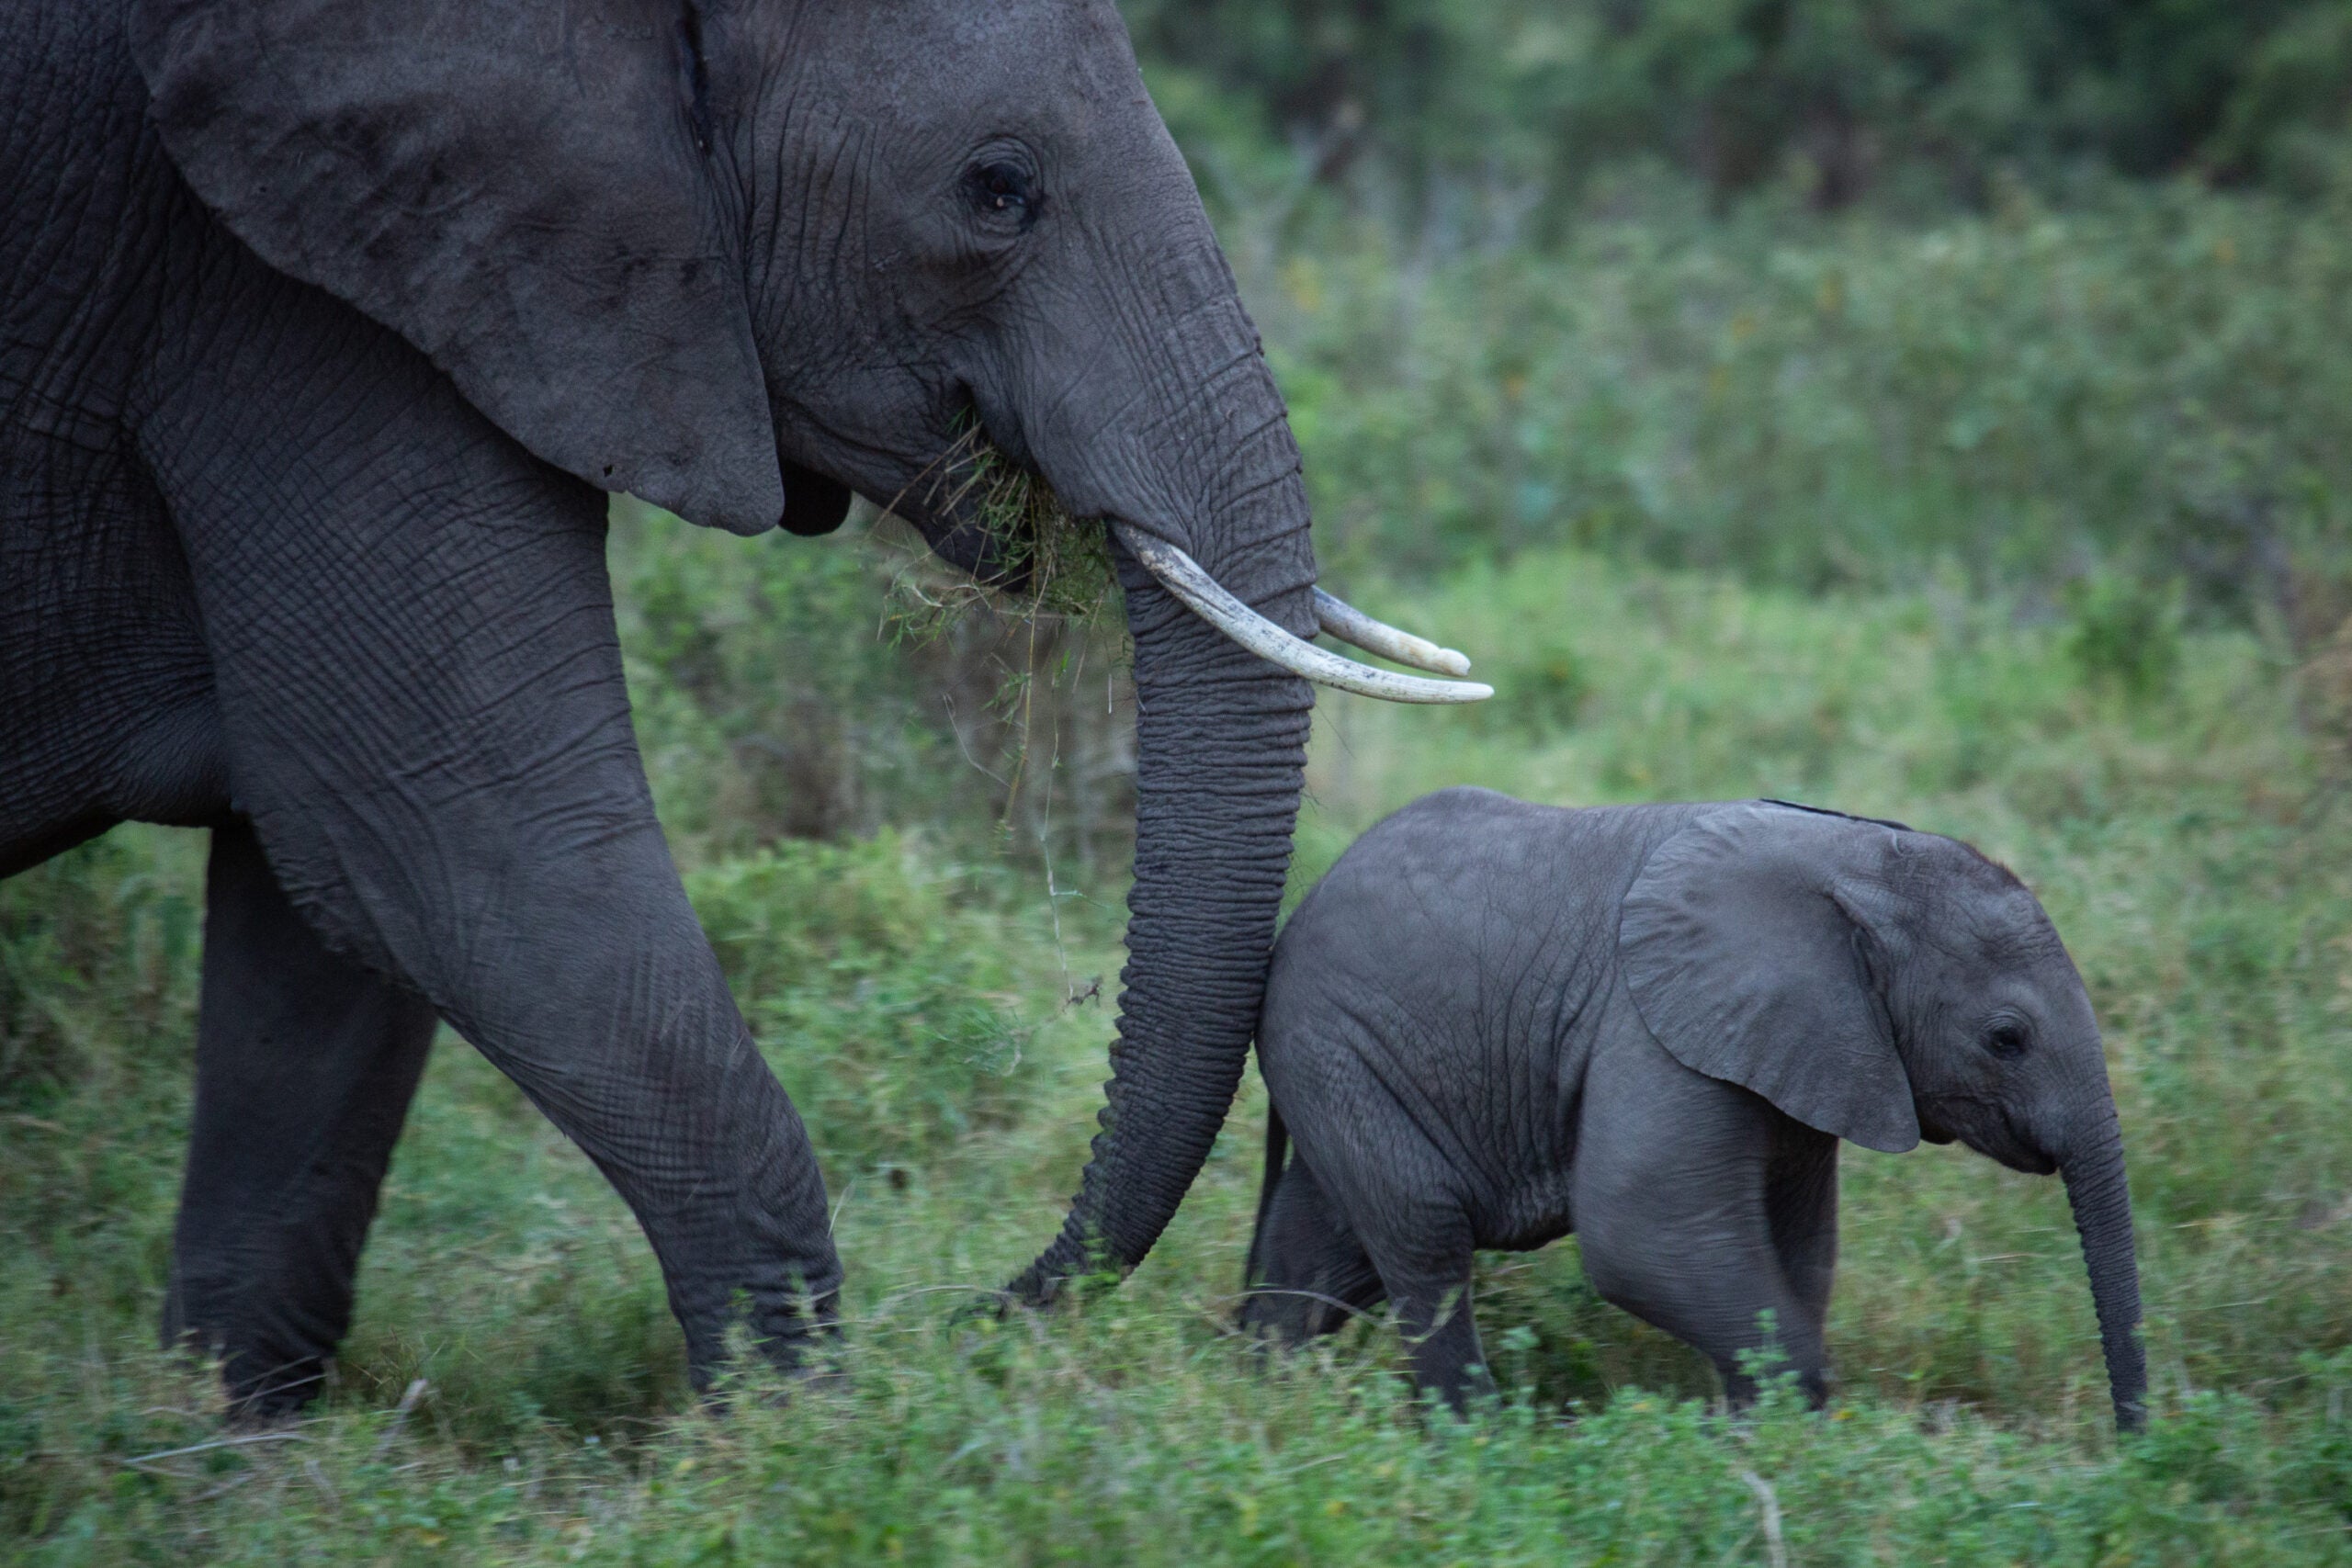 An African elephant with a calf in the savannah